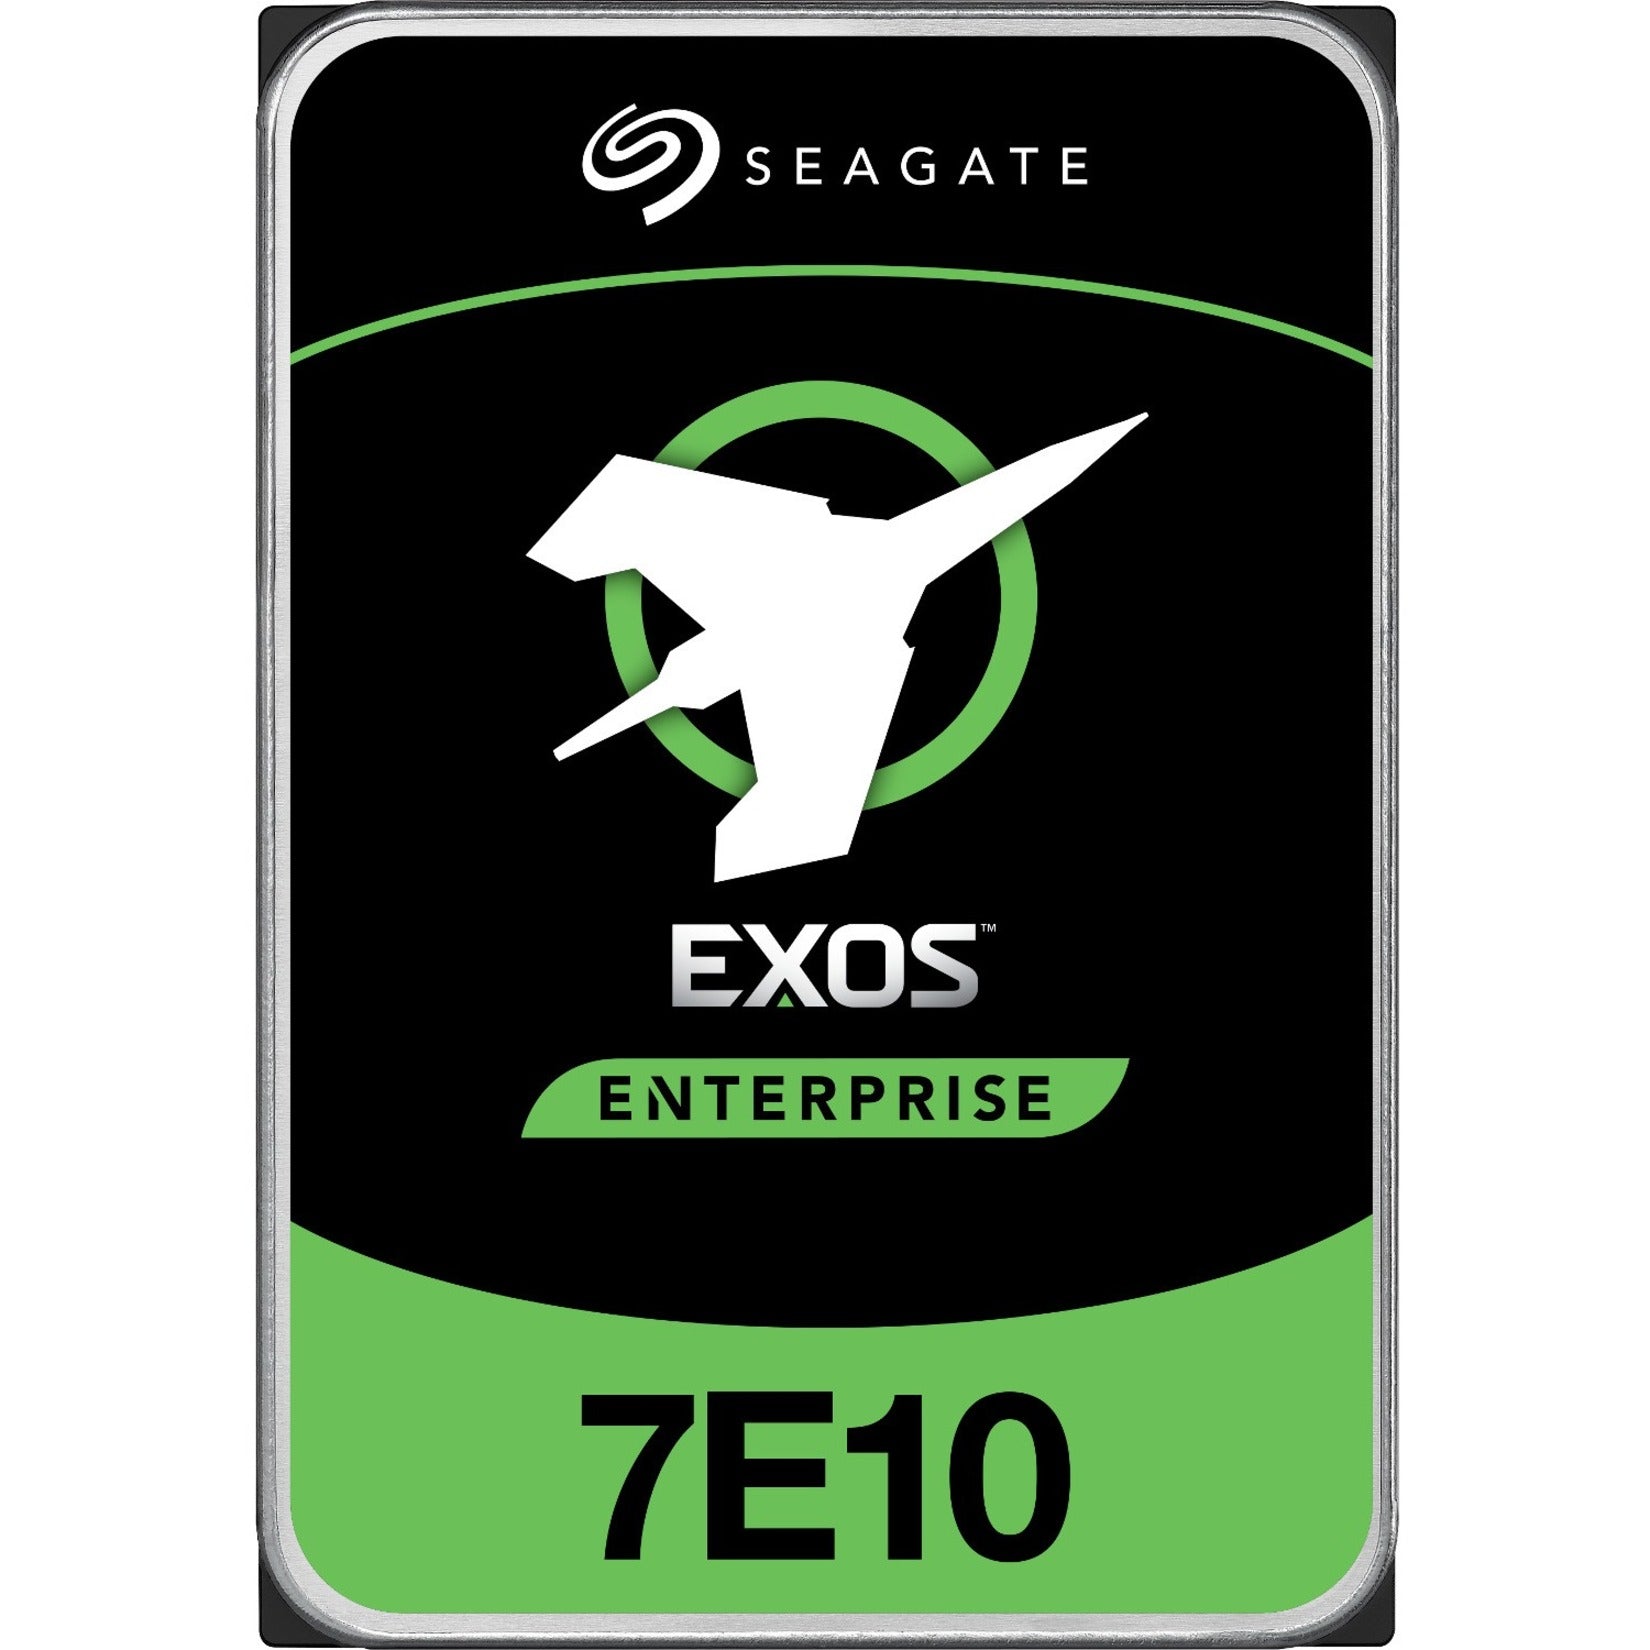 Seagate-IMSourcing ST8000NM018B Exos 7E10 8TB Internal Enterprise Hard Drive, 7200 RPM, 12Gb/s SAS, 512e/4Kn, 256MB Buffer